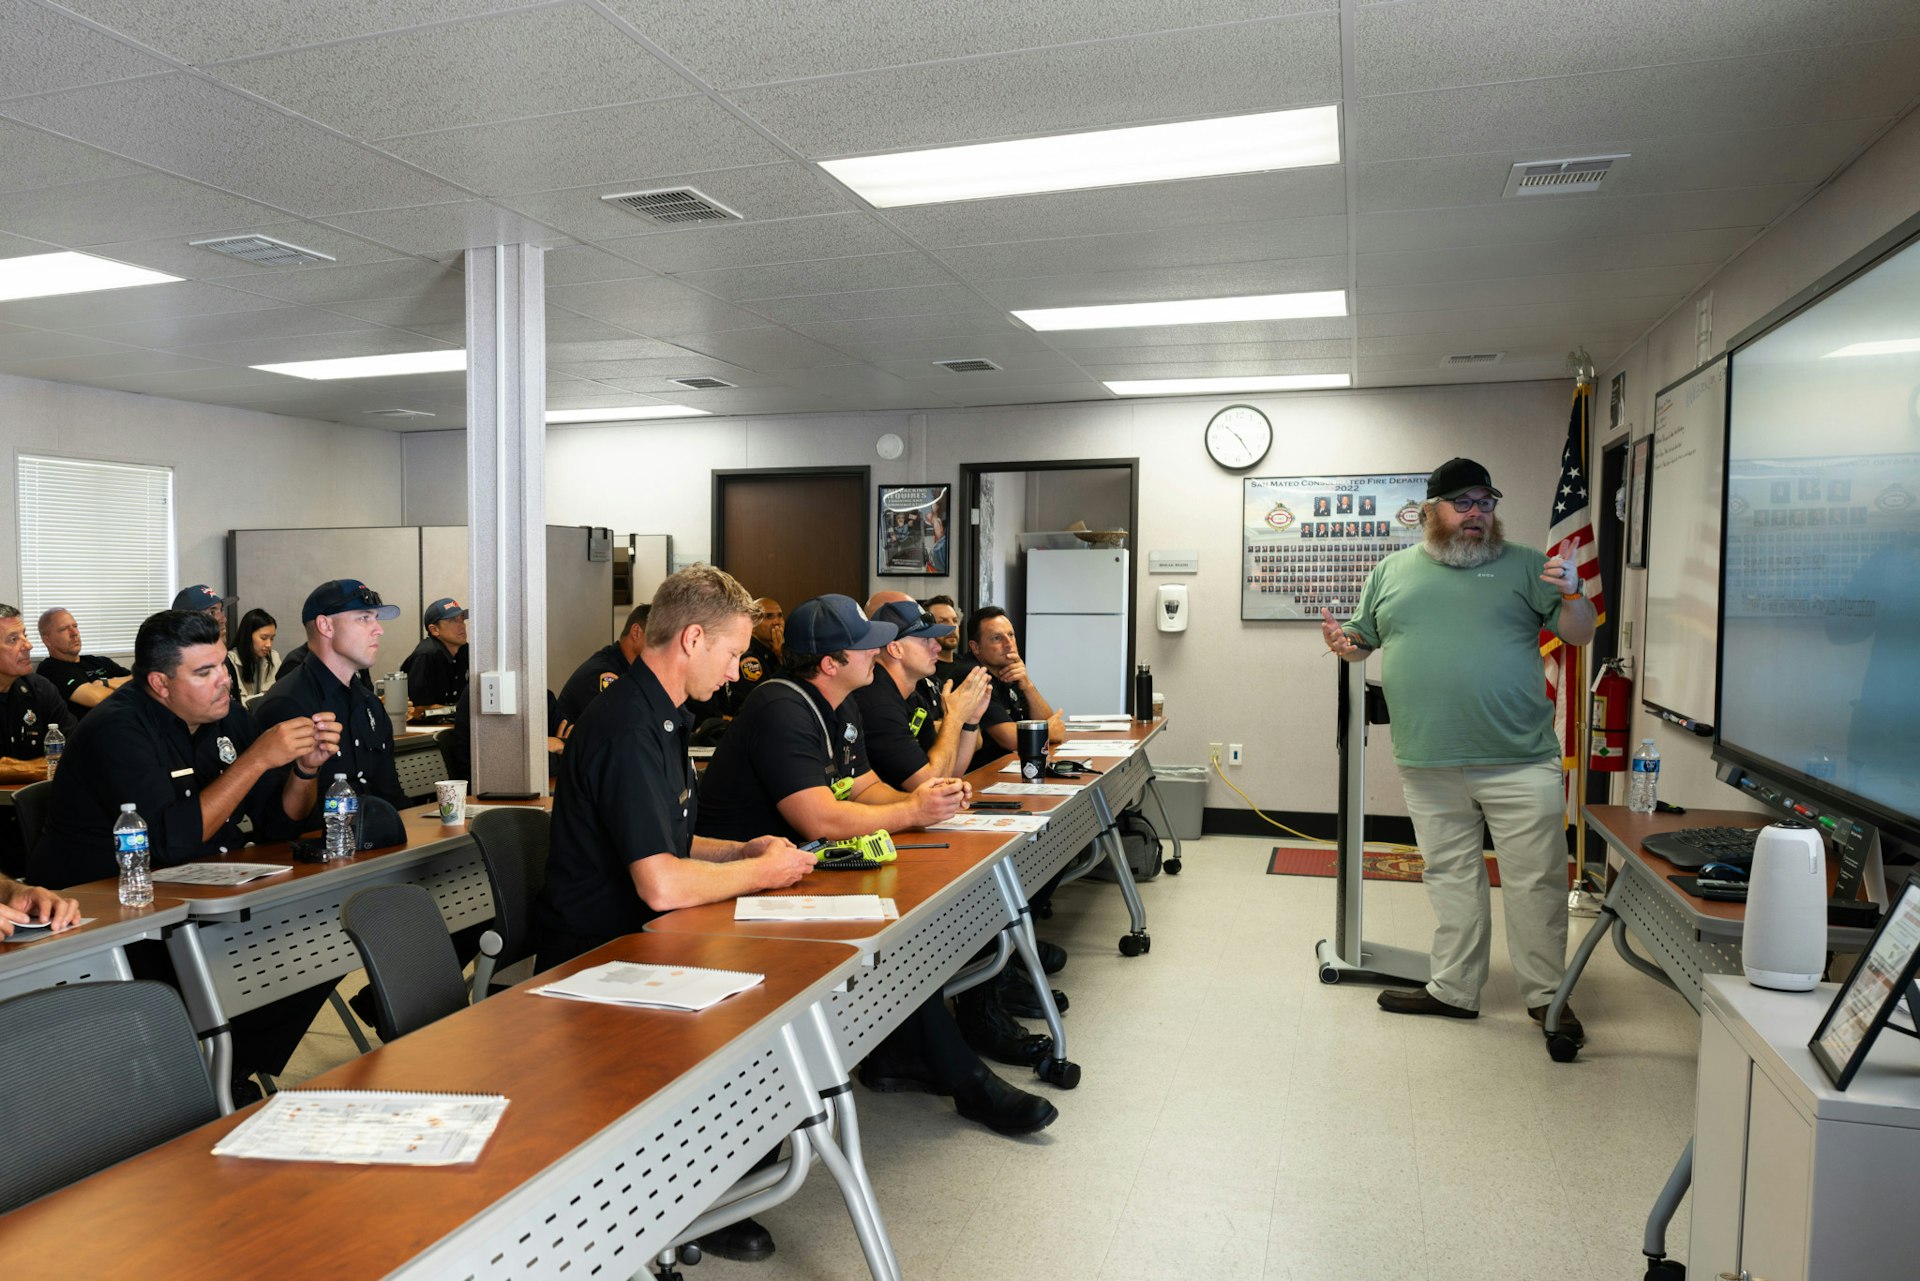 Zoox employee Bill instructing firefighters